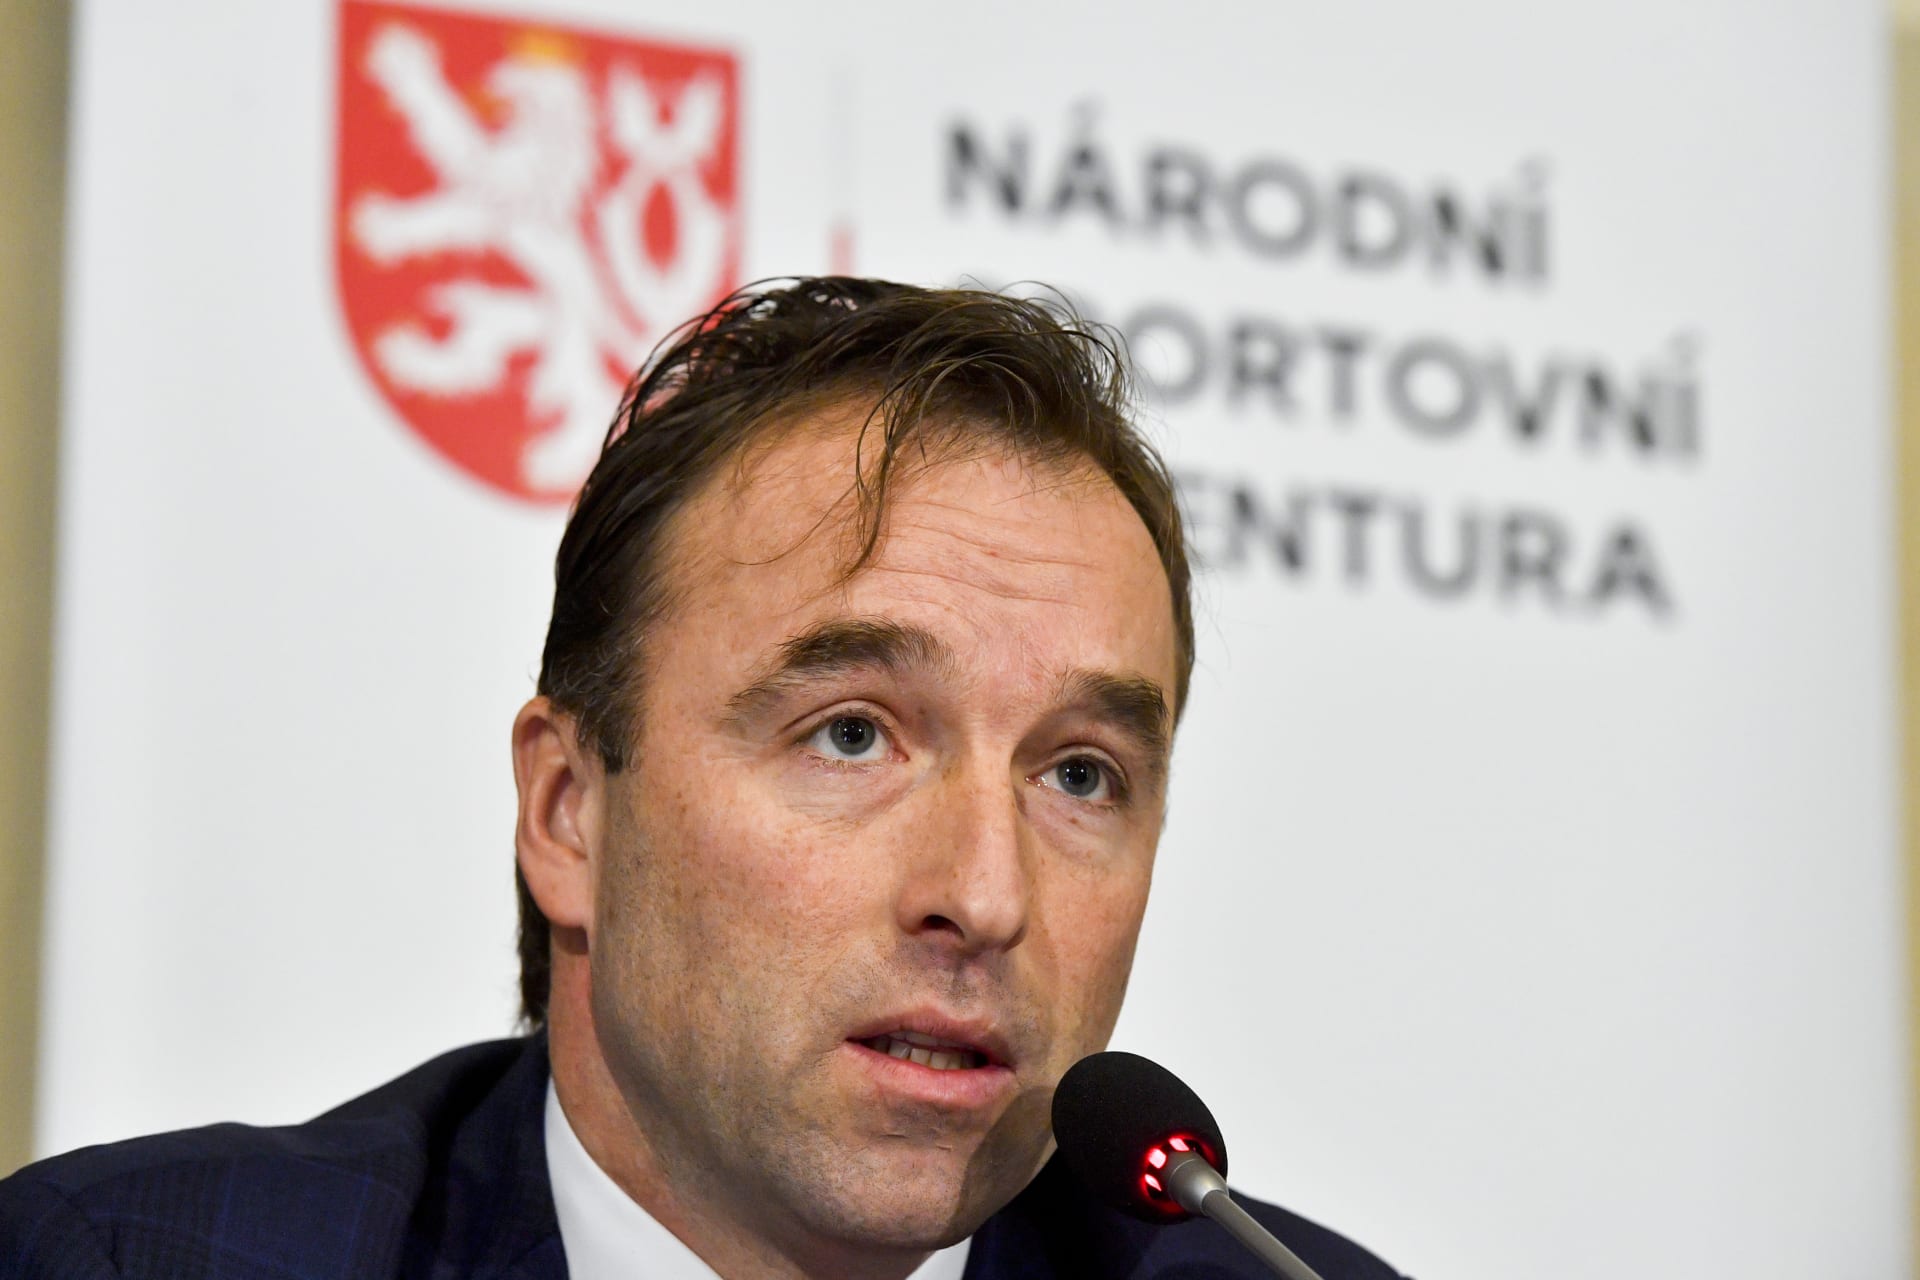 Bývalý poslanec za hnutí ANO Milan Hnilička chce po skandálu nadále vést Národní sportovní agenturu (NSA).